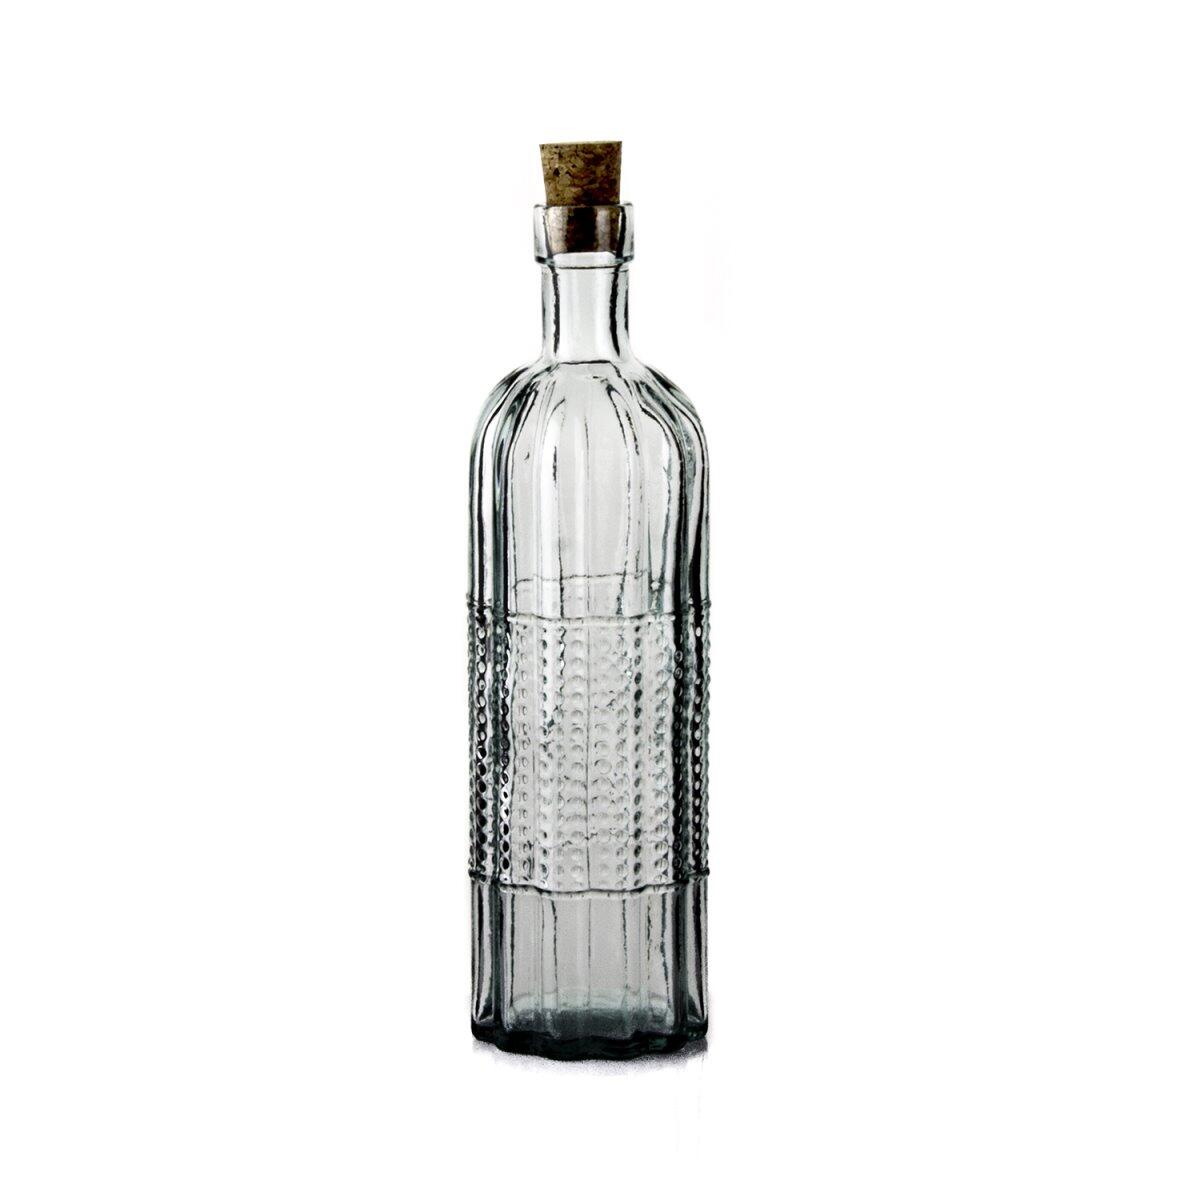 Sanmiguel Botella Toscana Oil Bottle 500 ml